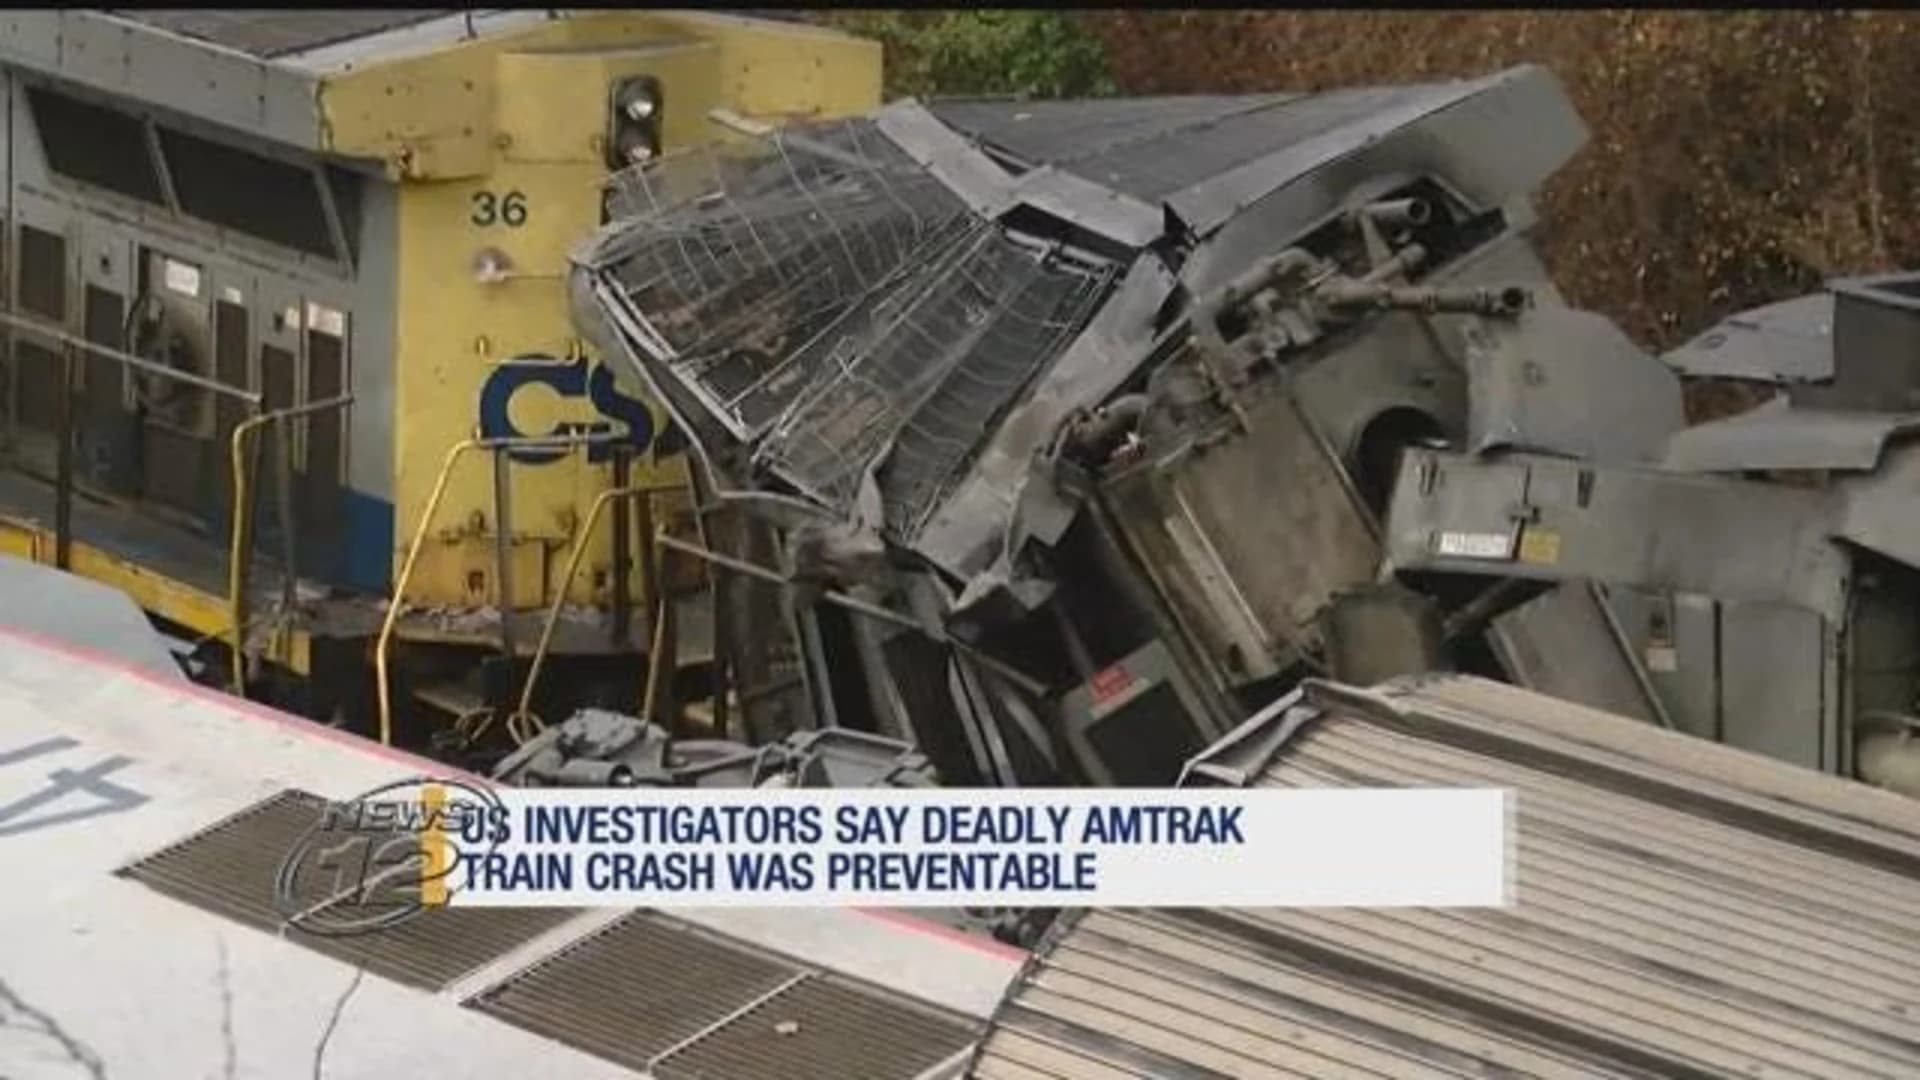 US investigators say deadly Amtrak train crash preventable